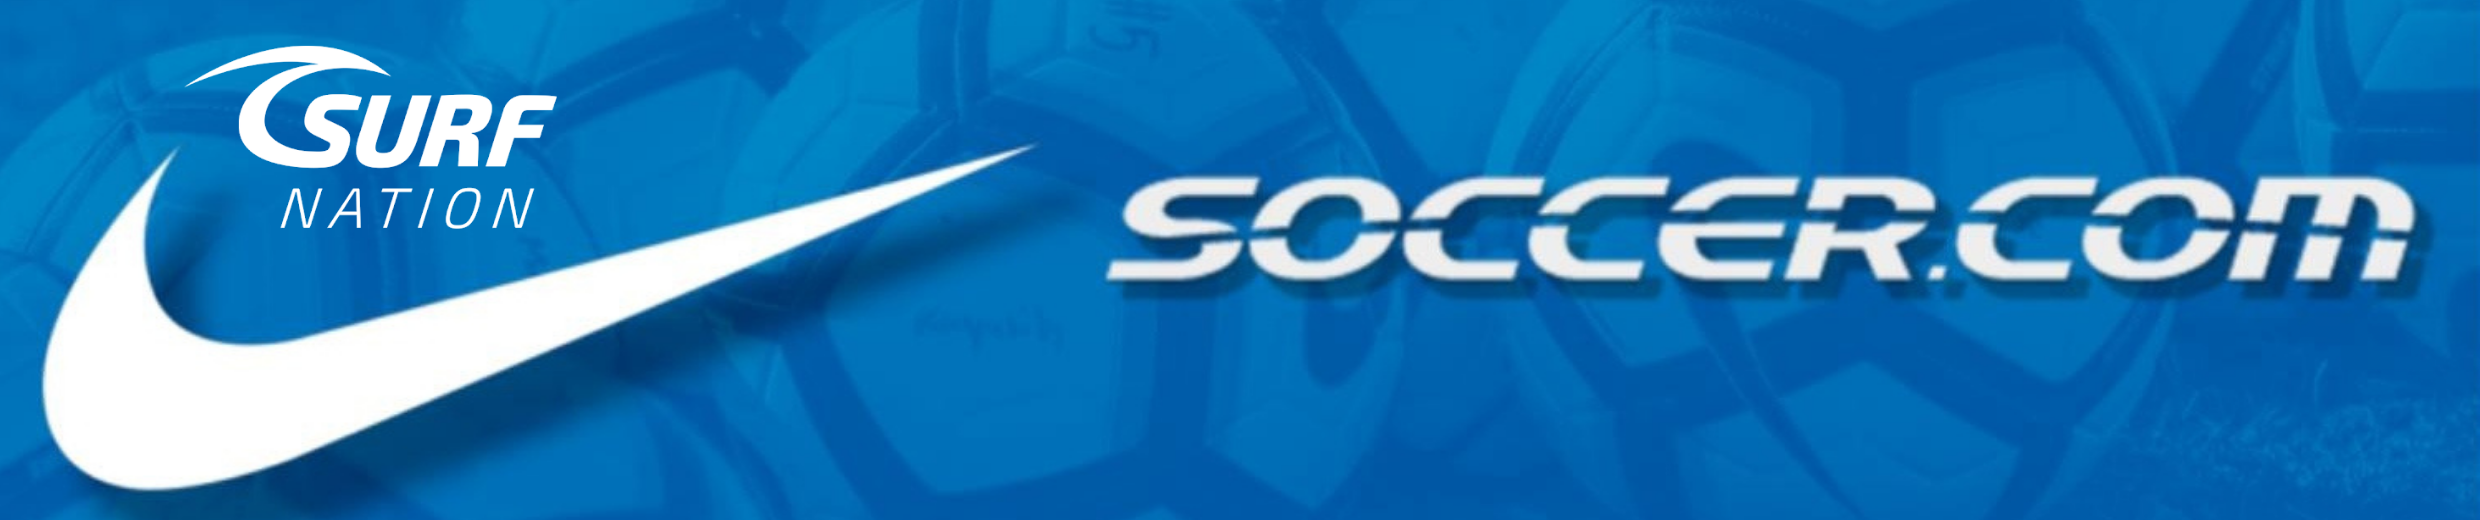 Soccer.com Nike